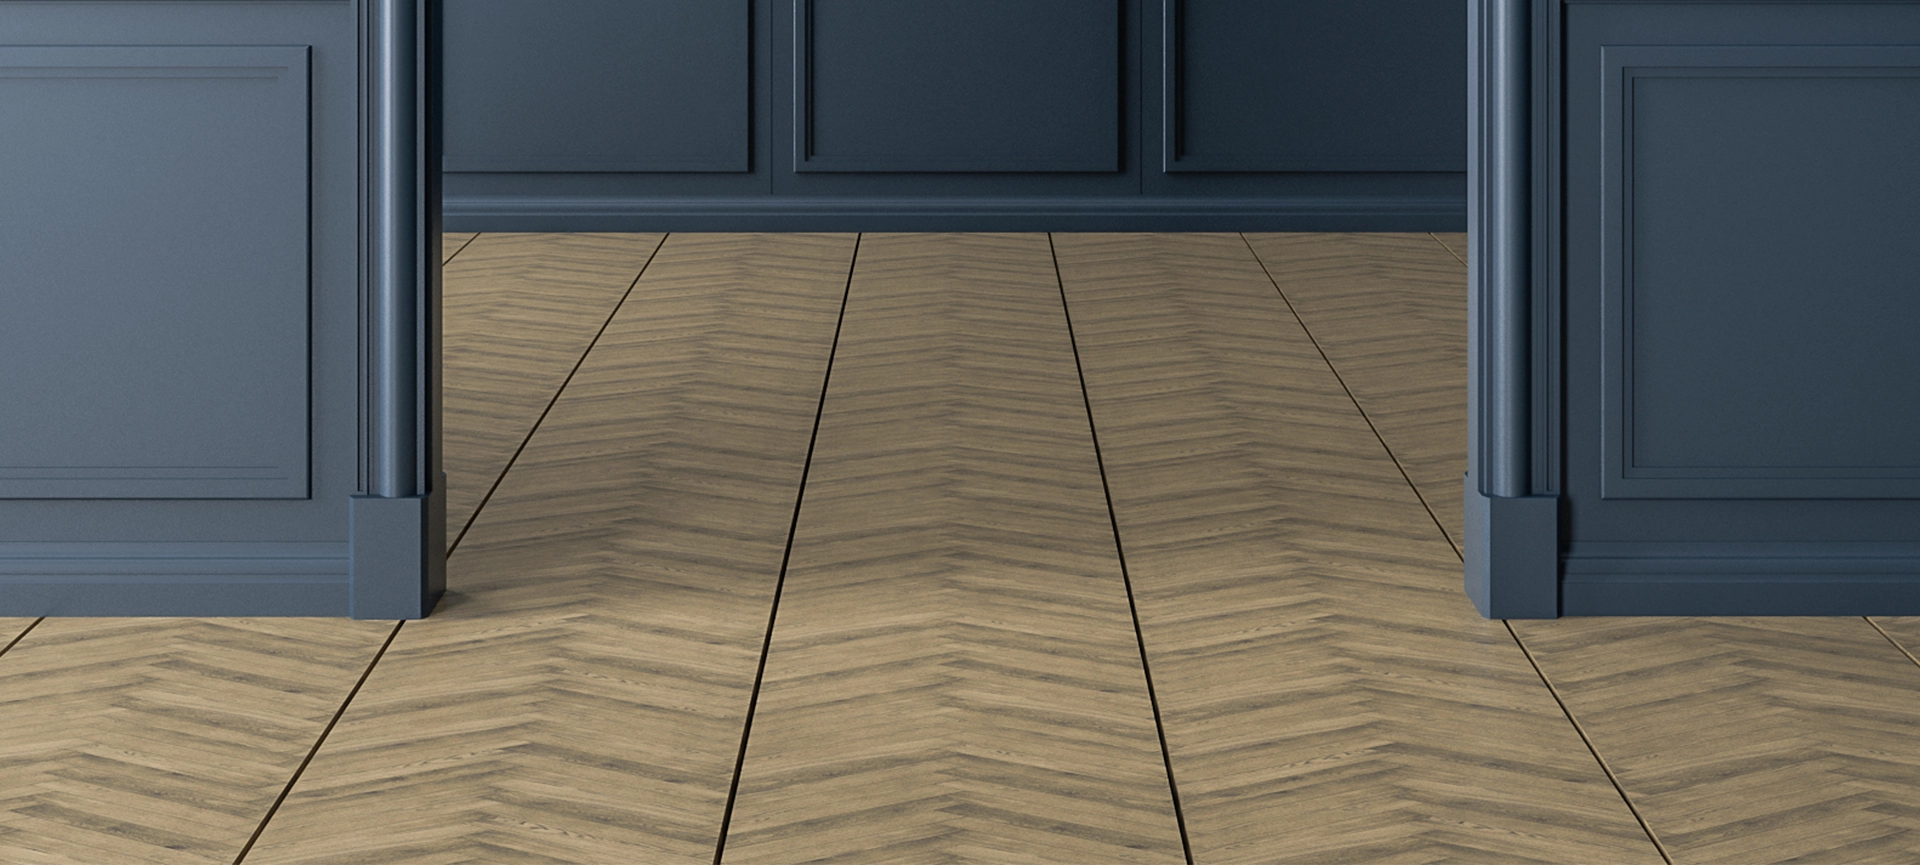 ideal chevron flooring pattern